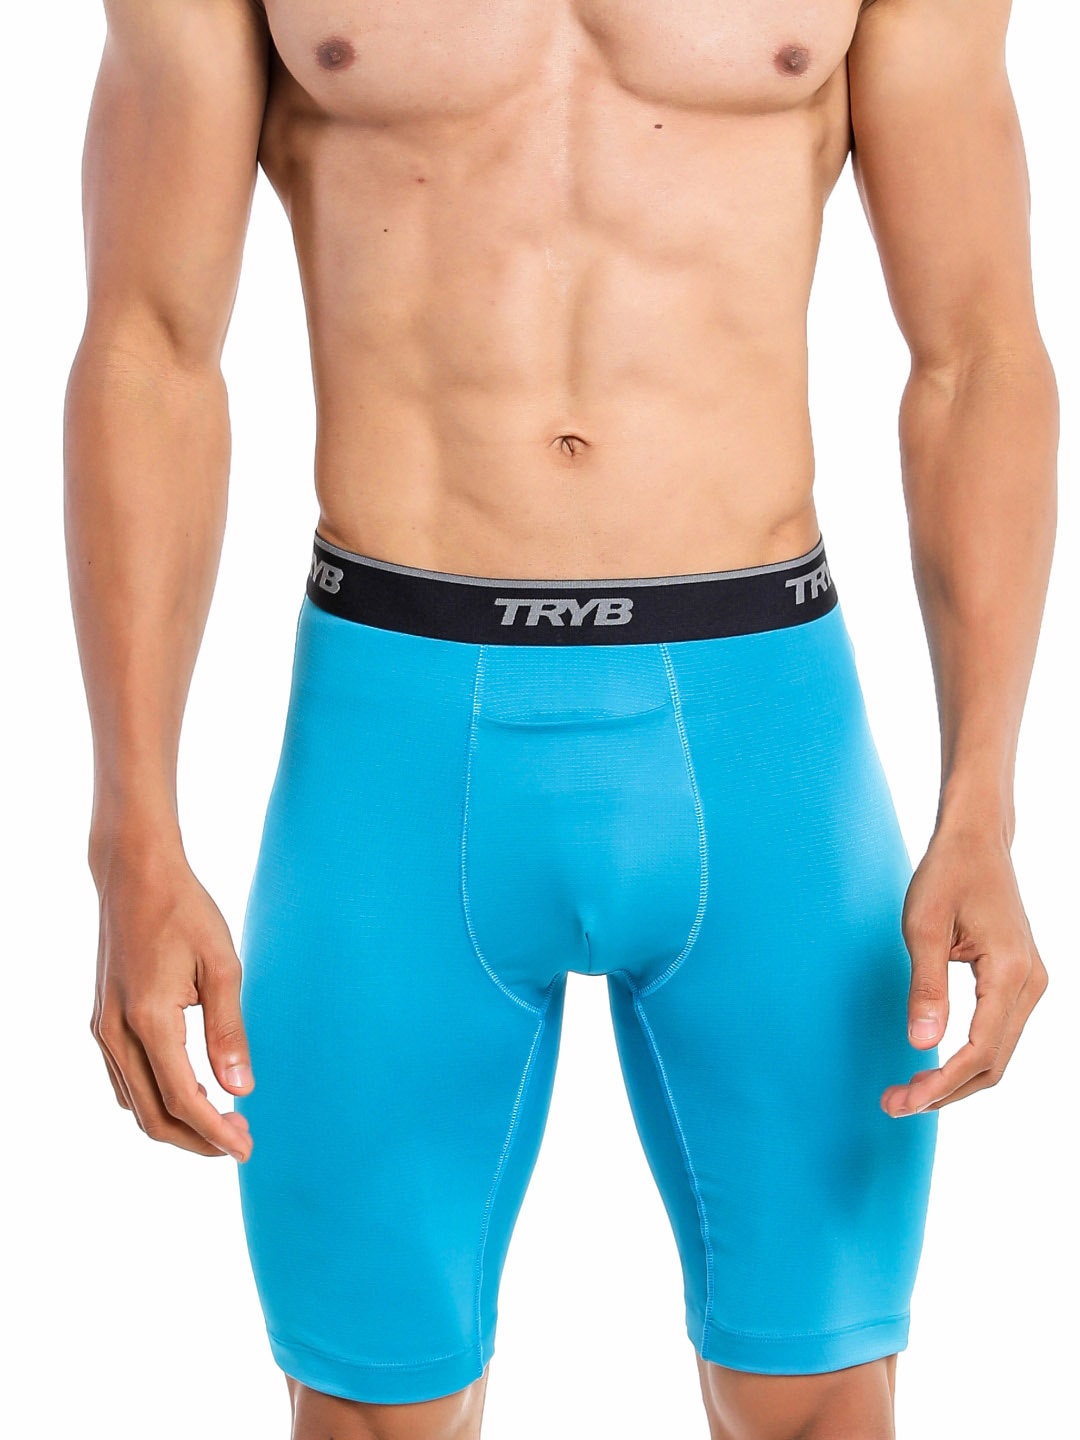 

TRYB Men Skinny Fit Cycling Sports Shorts, Blue